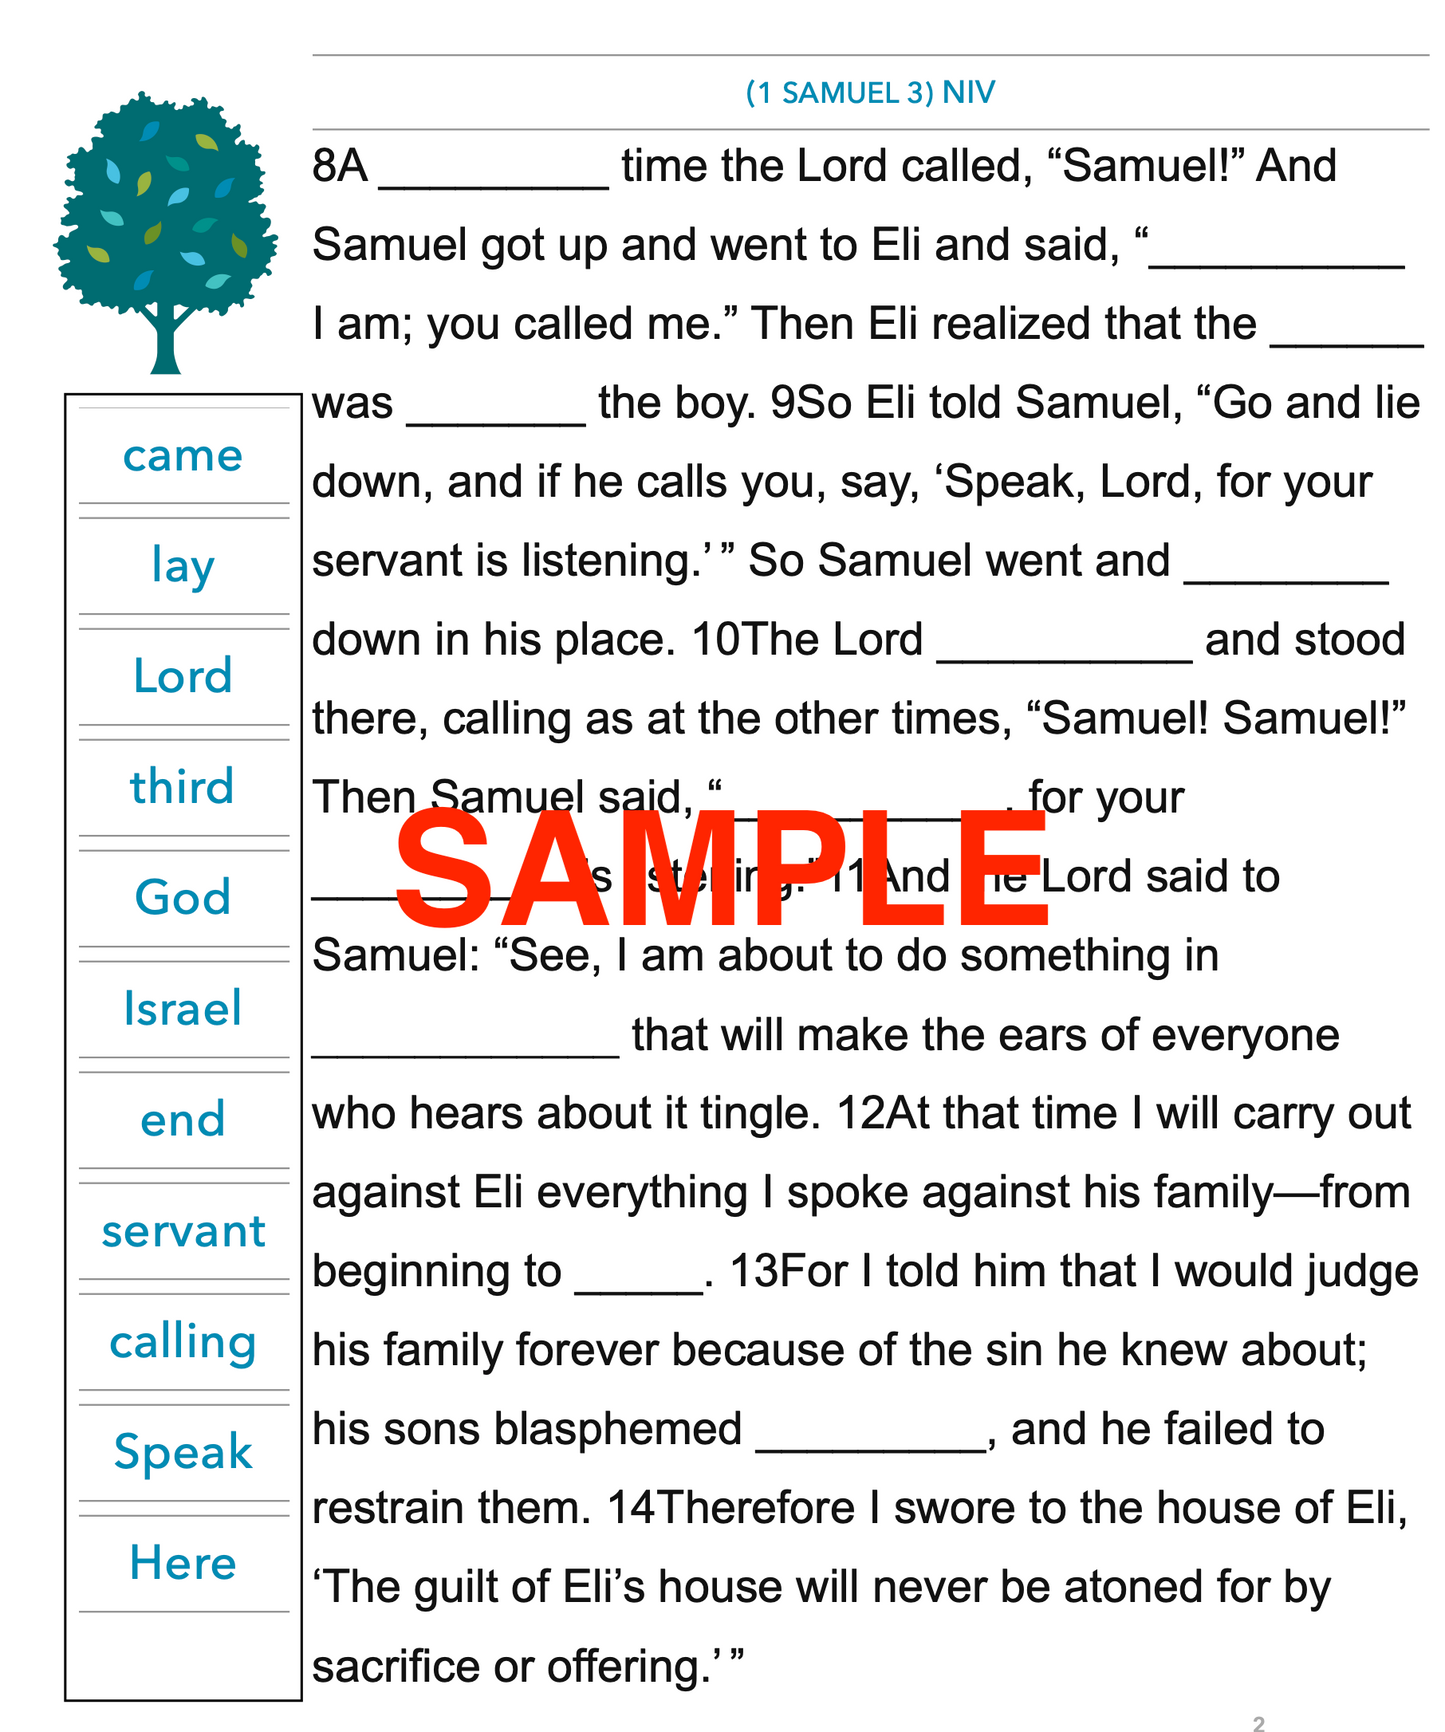 Fill in the Bible Blanks - 1 SAMUEL 3